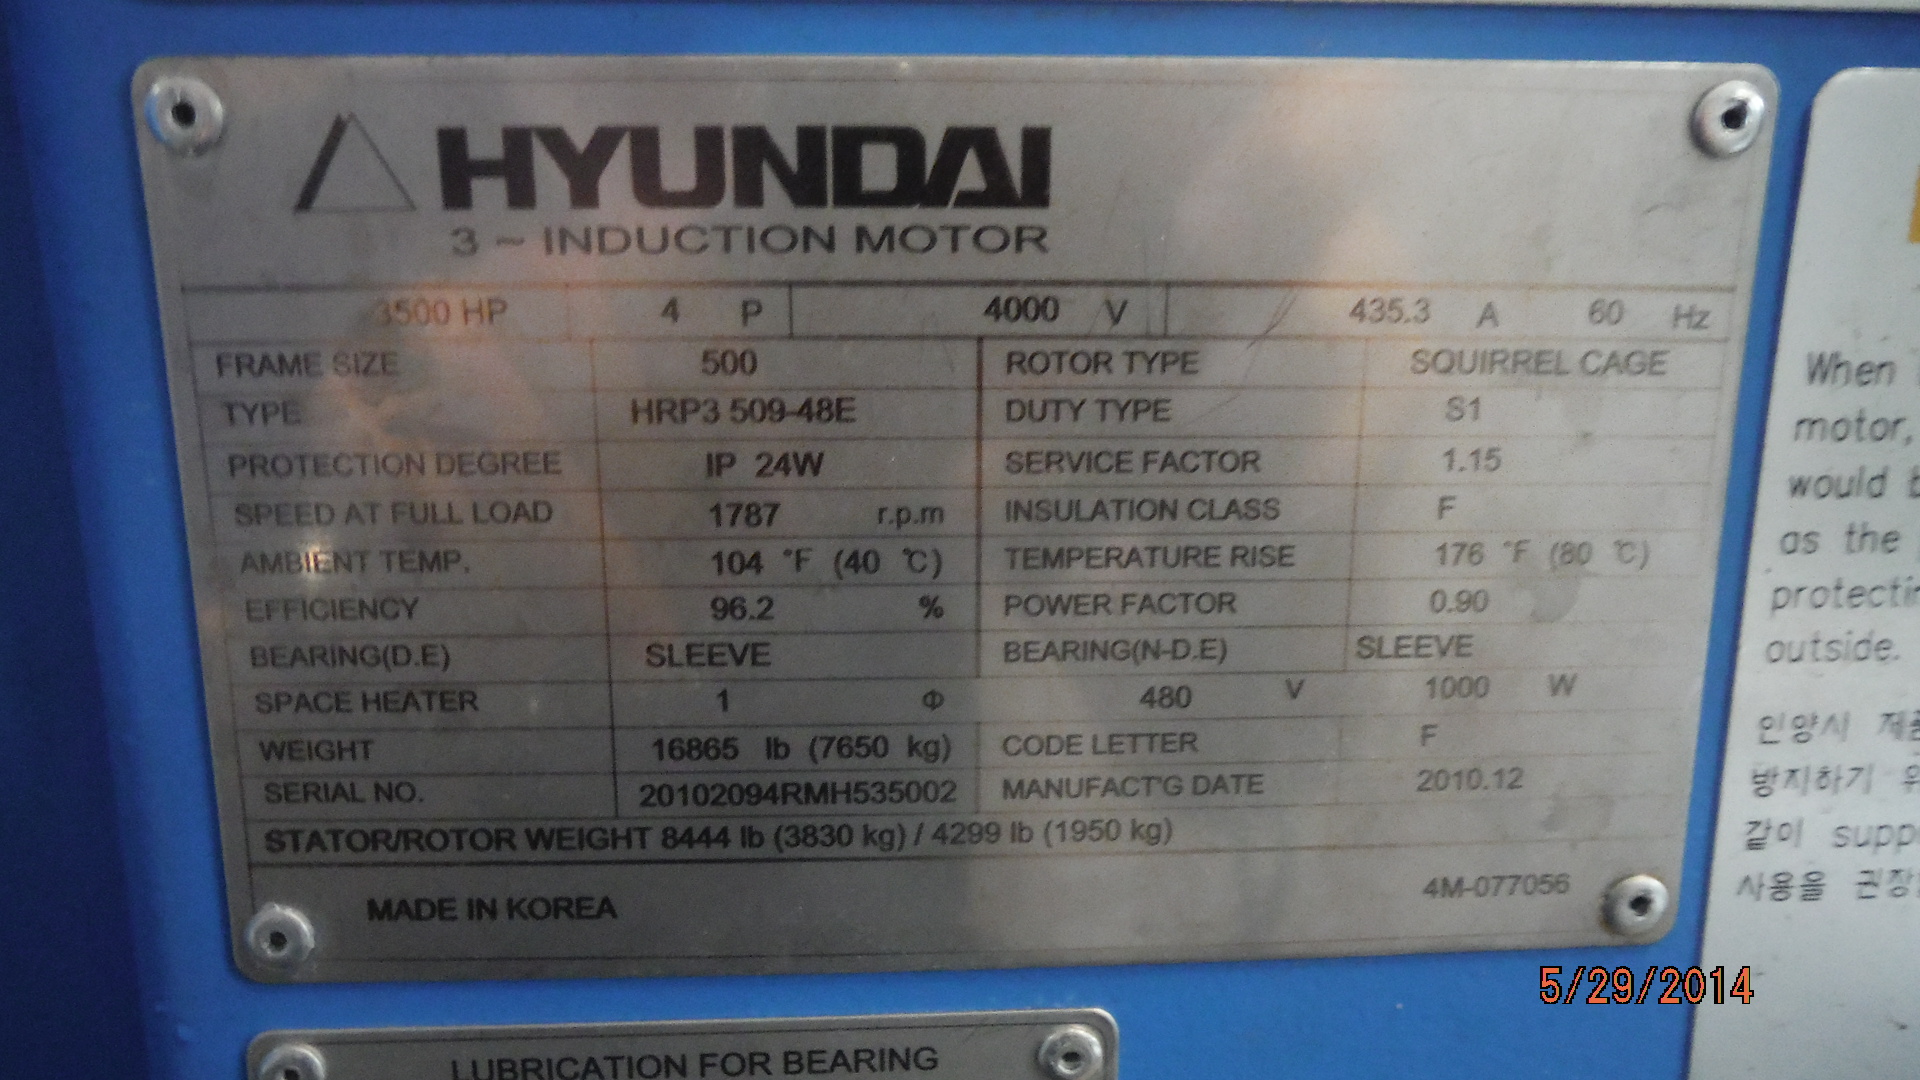 Hyundai 3500 HP 1800 RPM 500 Squirrel Cage Motors 71172